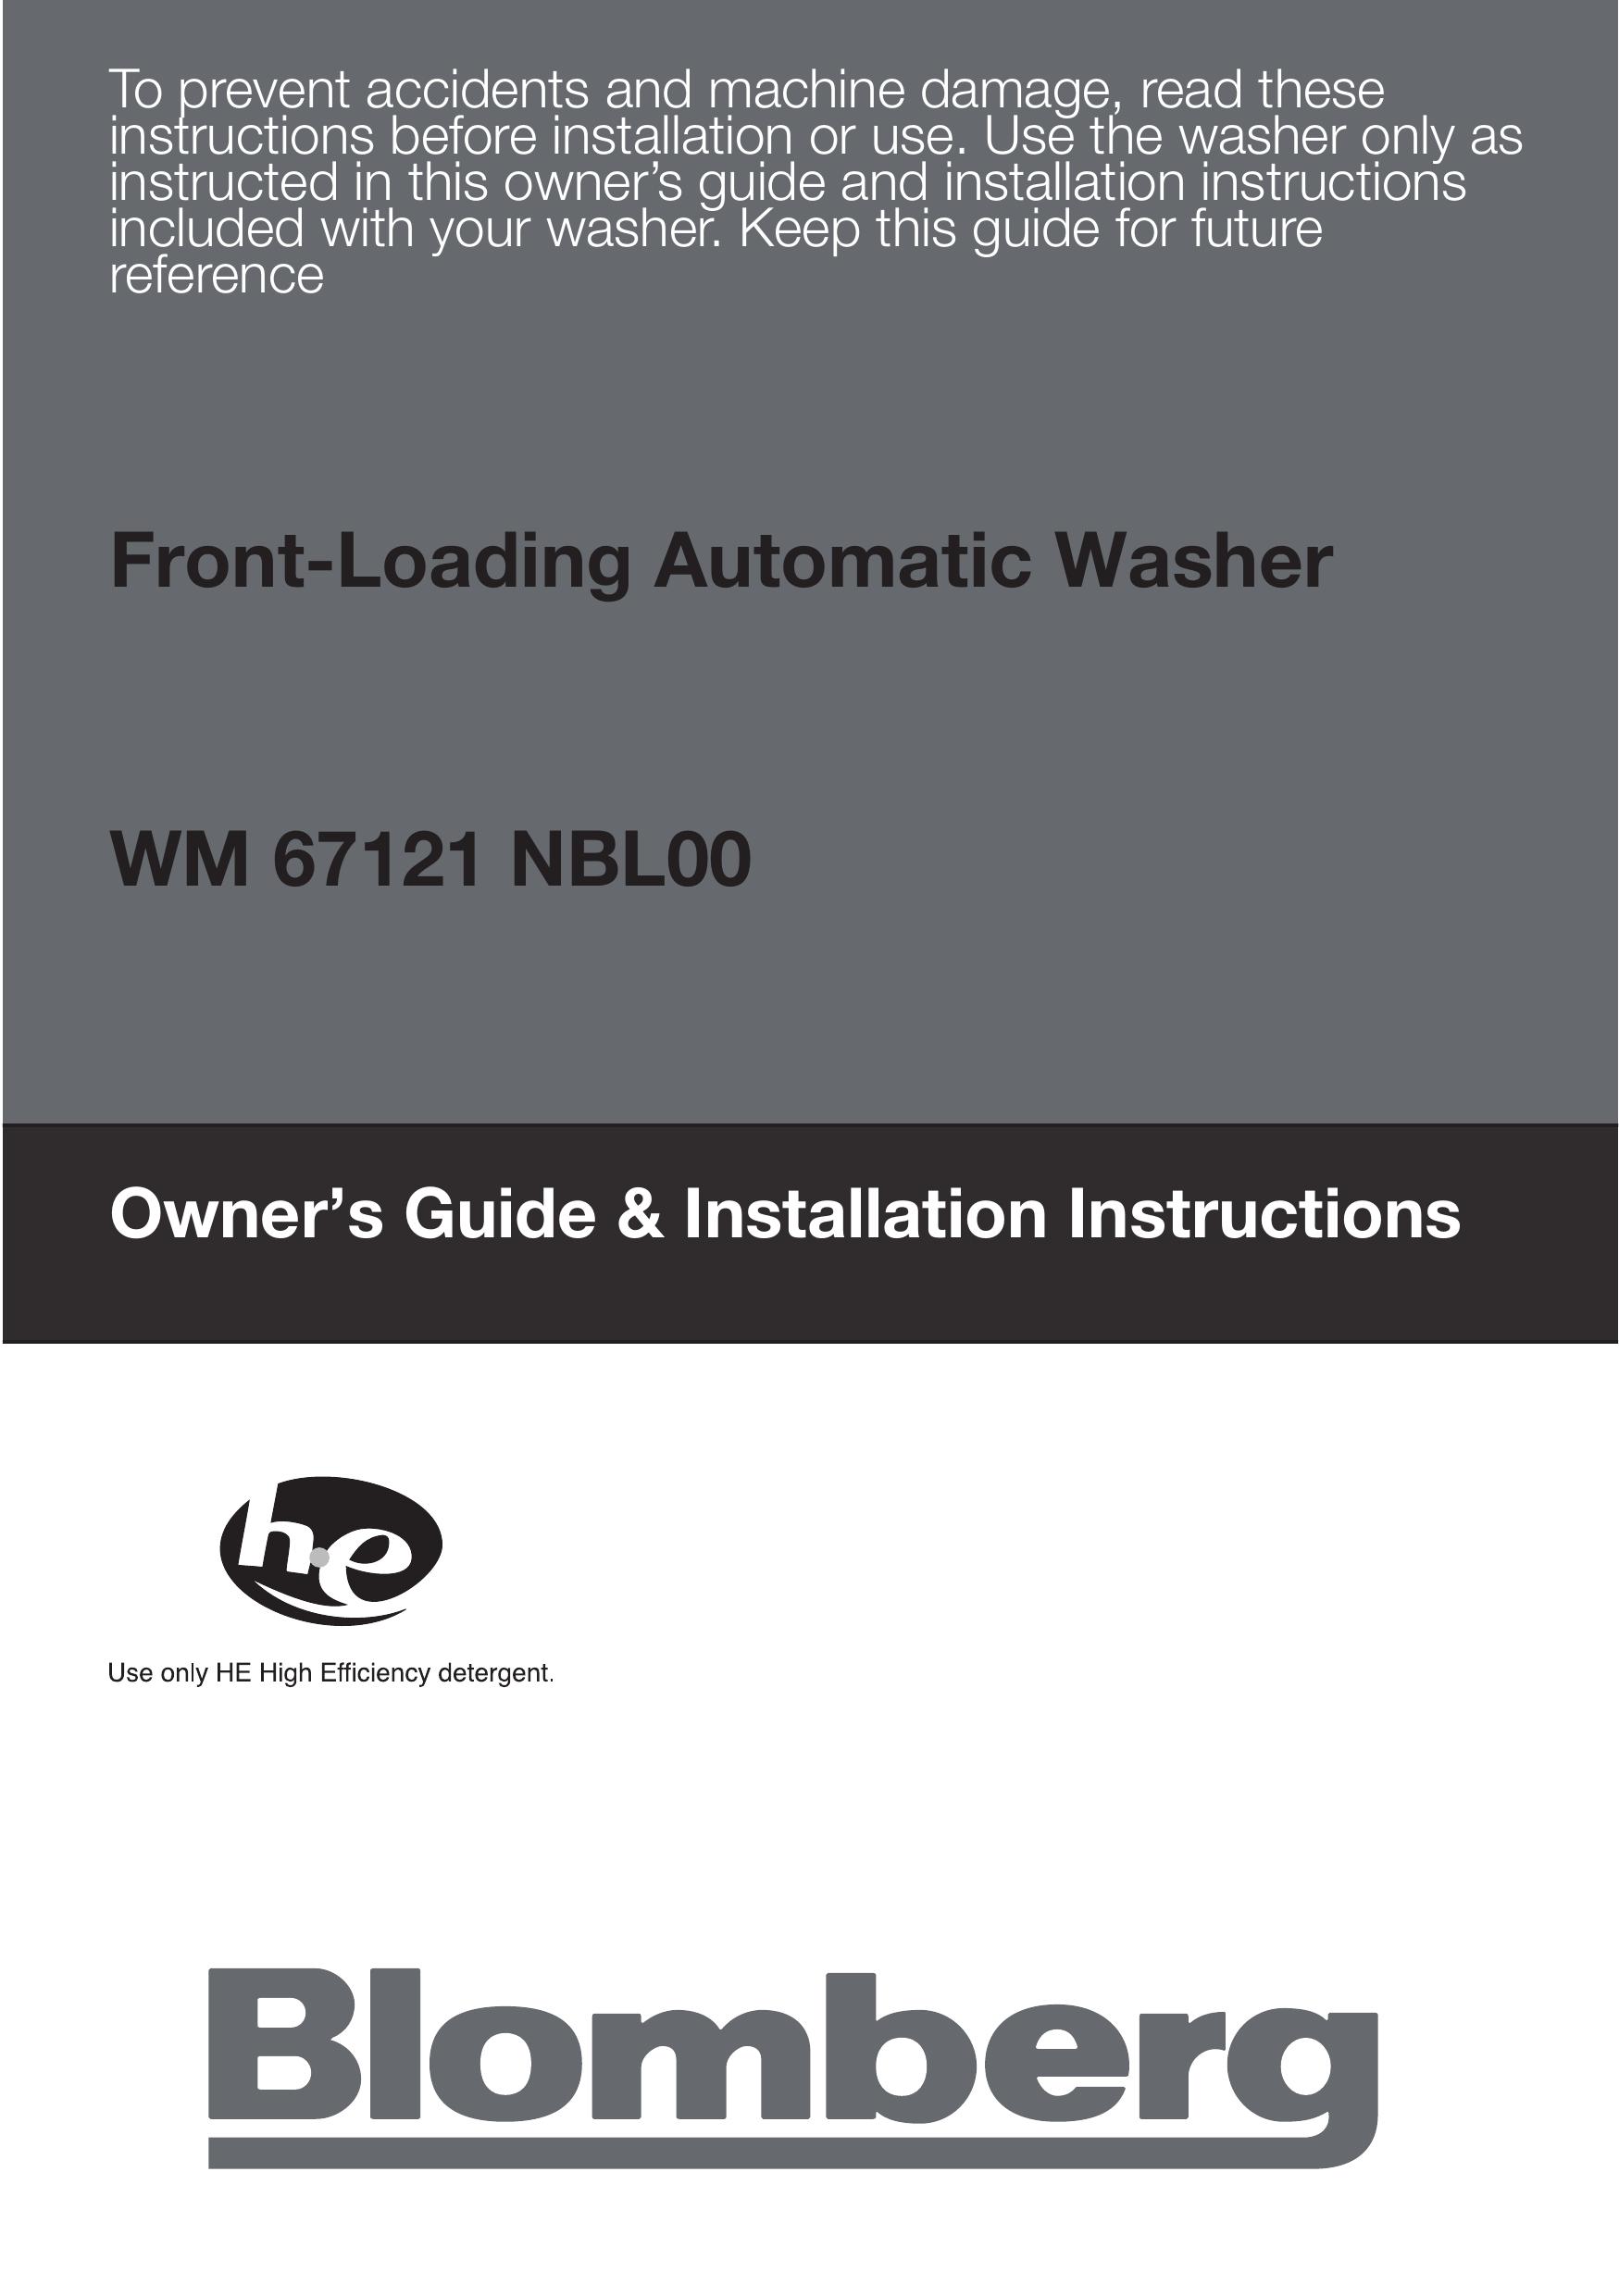 Blomberg WM 67121 NBL00 Washer User Manual